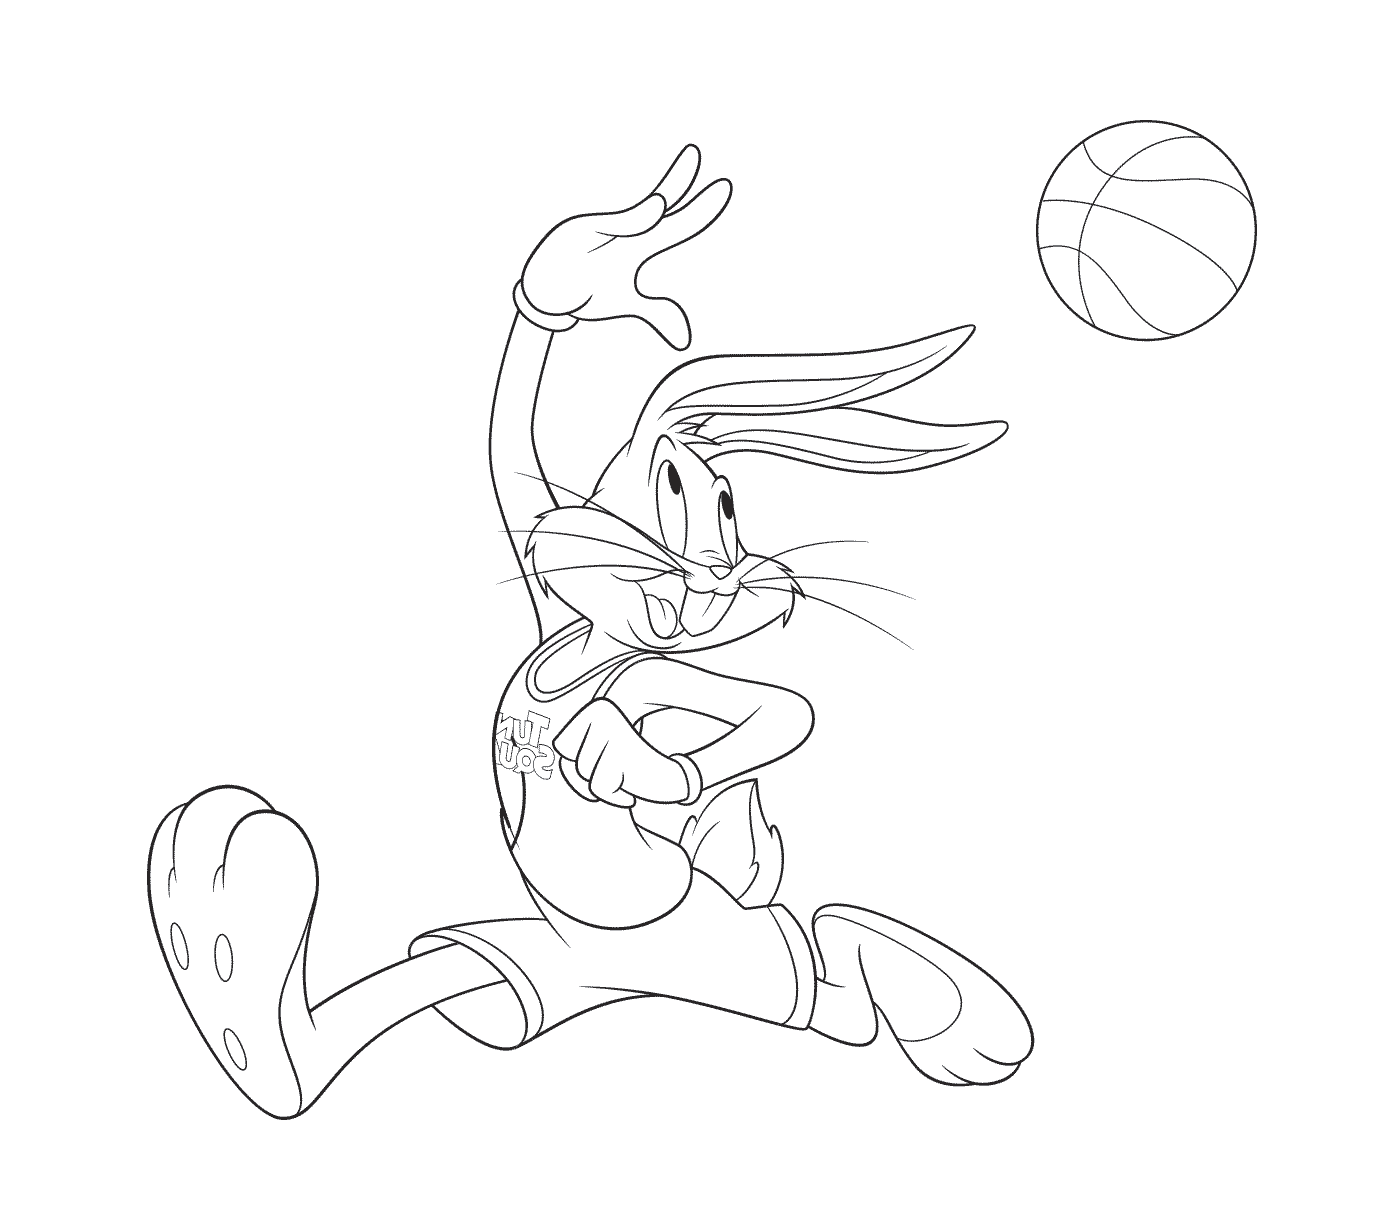   Lapin jouant au basket 